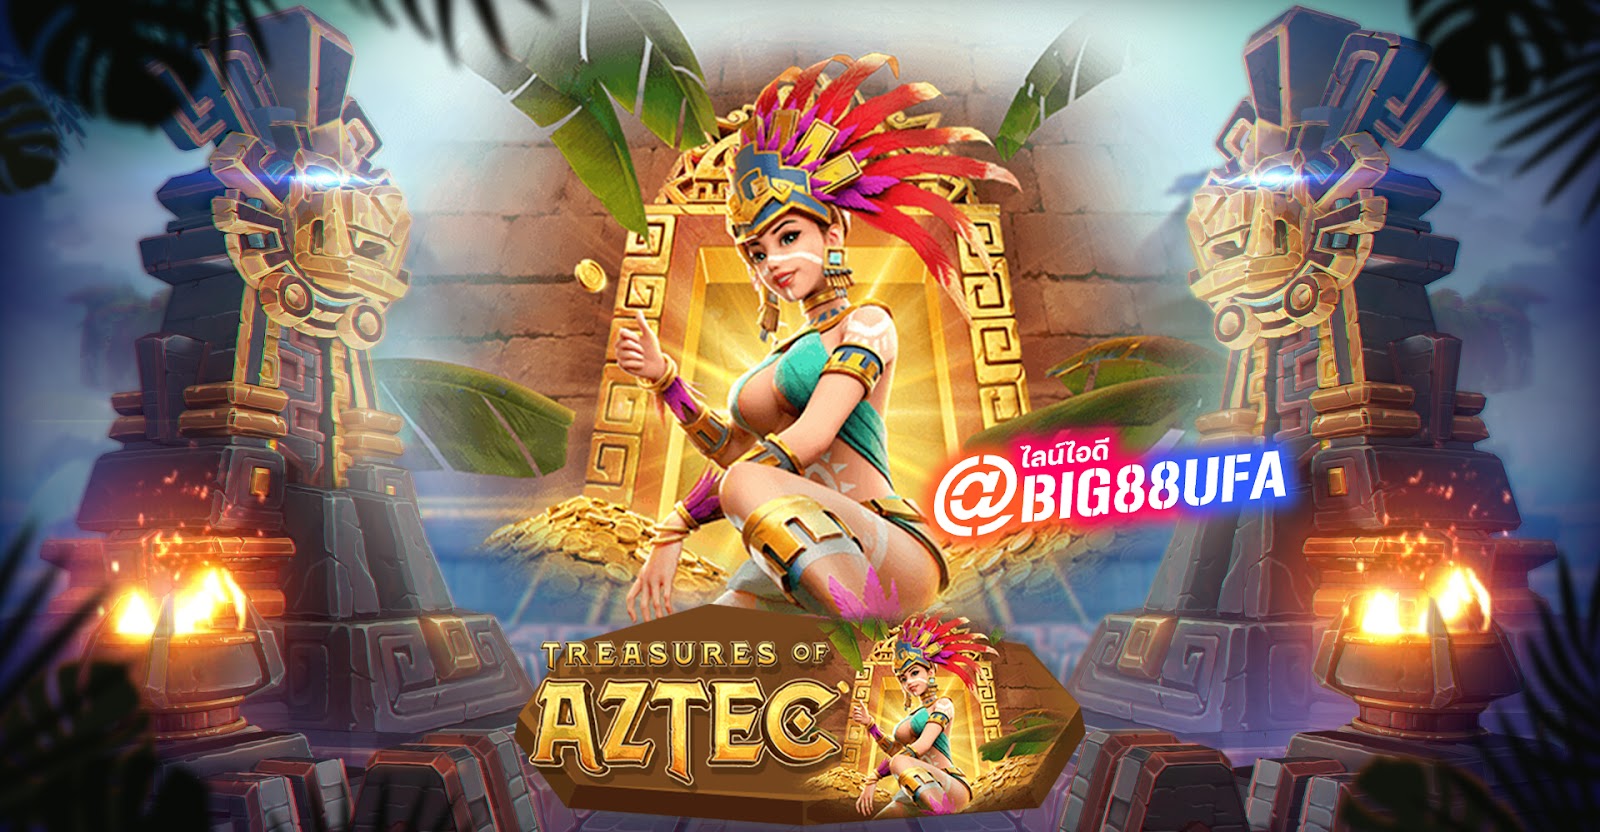 Treasures of Aztec เกมตามล่าหาสมบัติ ขุมทรัพย์พีระมิด